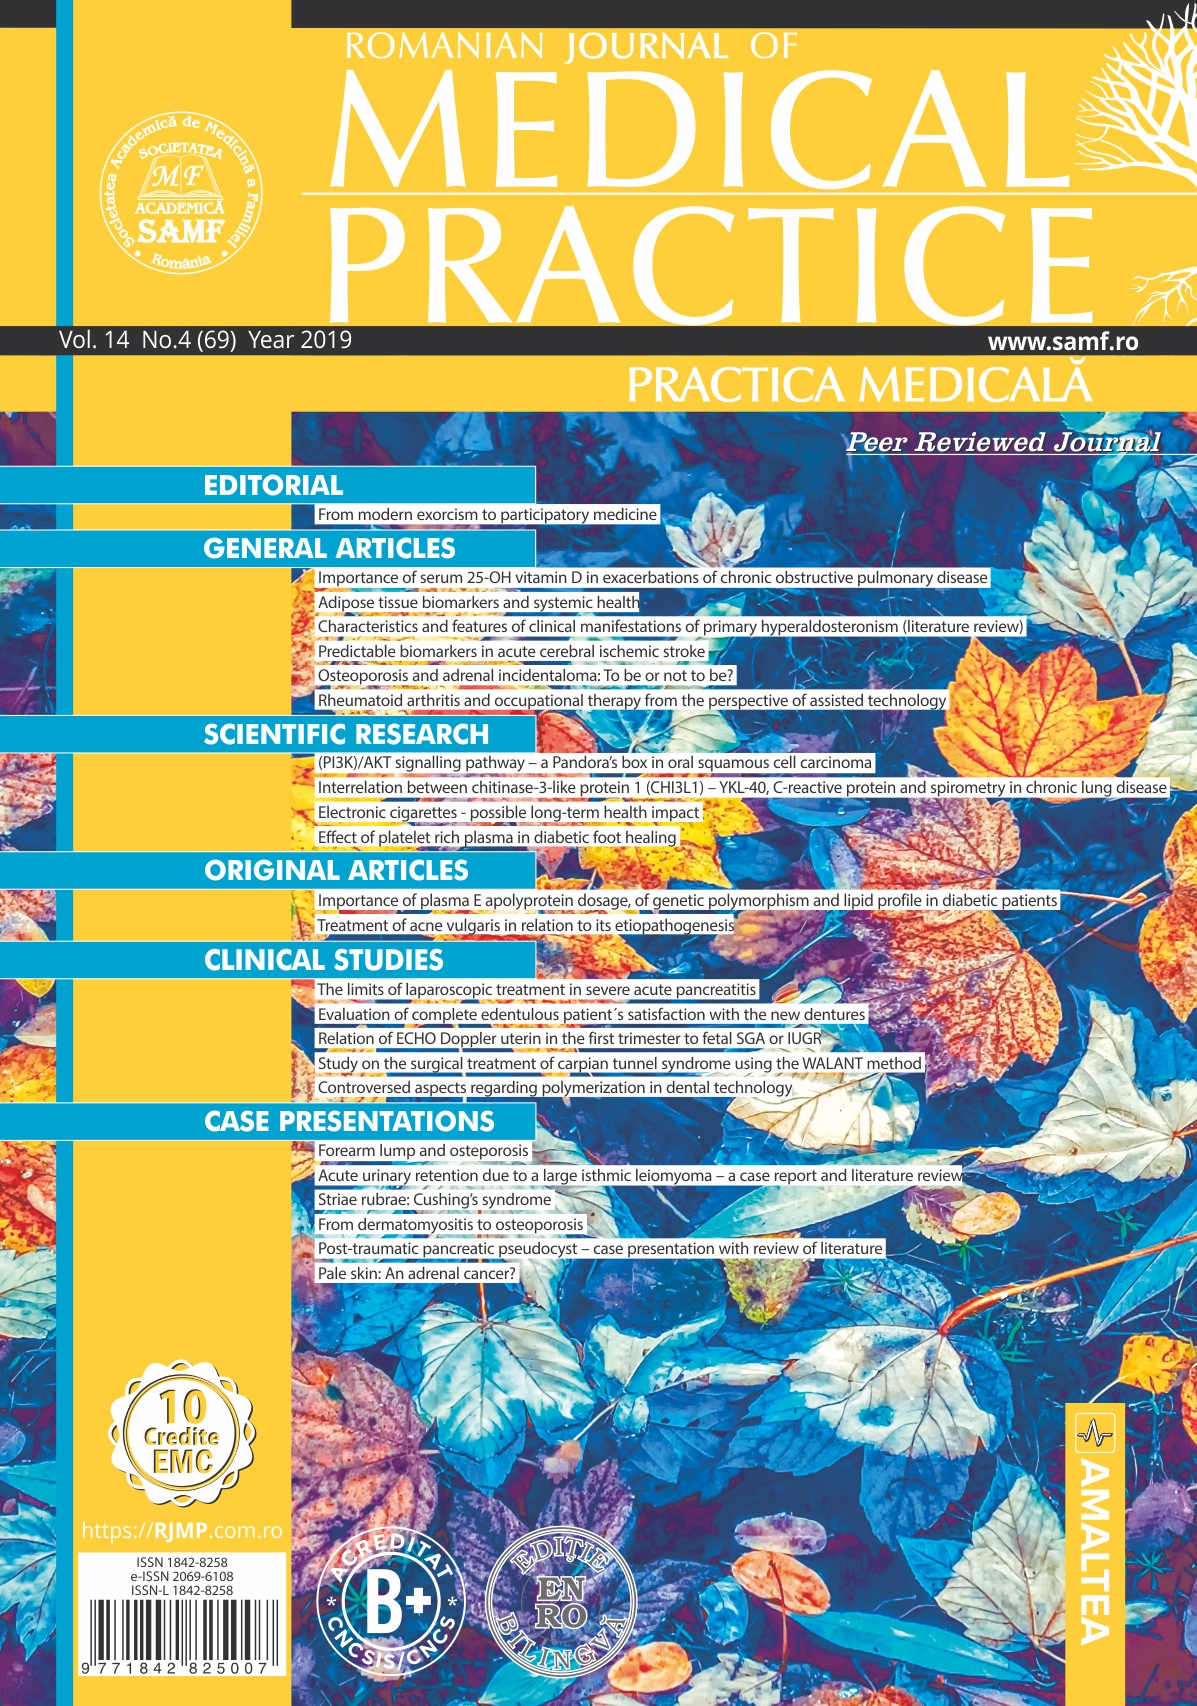 Romanian Journal of Medical Practice | Practica Medicala, Vol. XIV, No. 4 (69), 2019